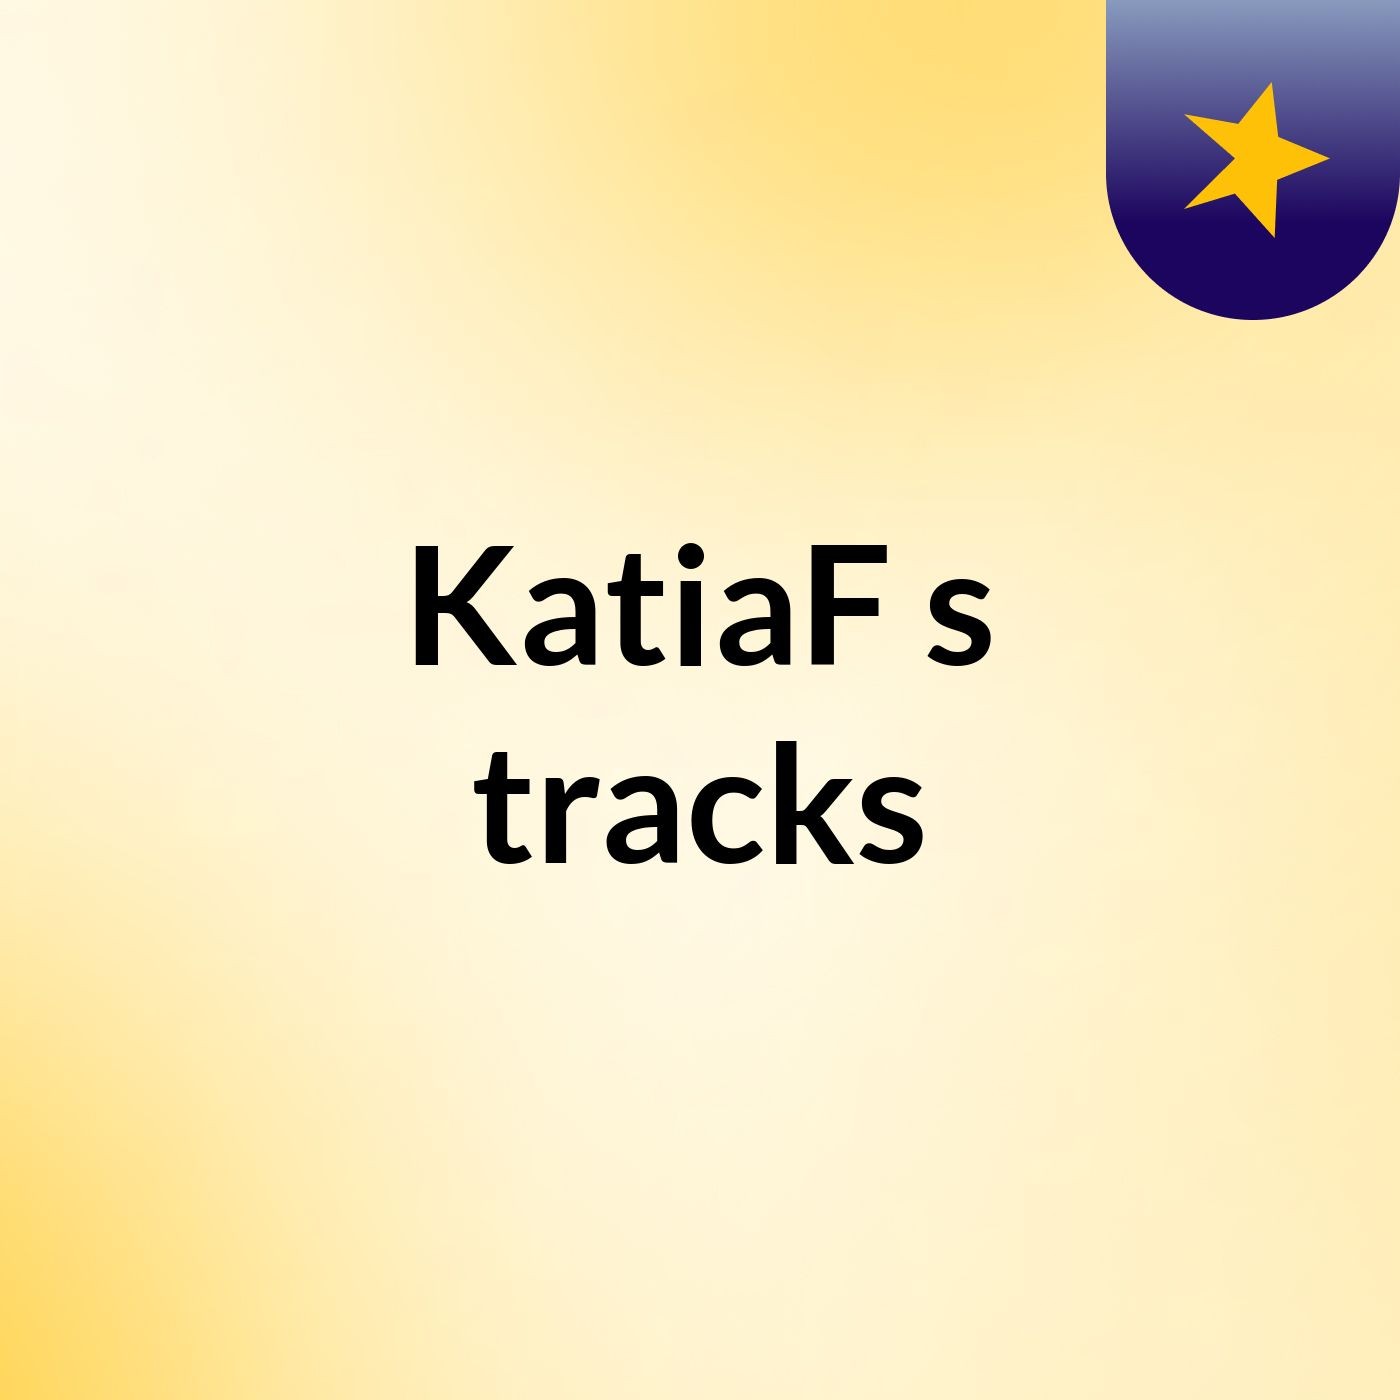 KatiaF's tracks